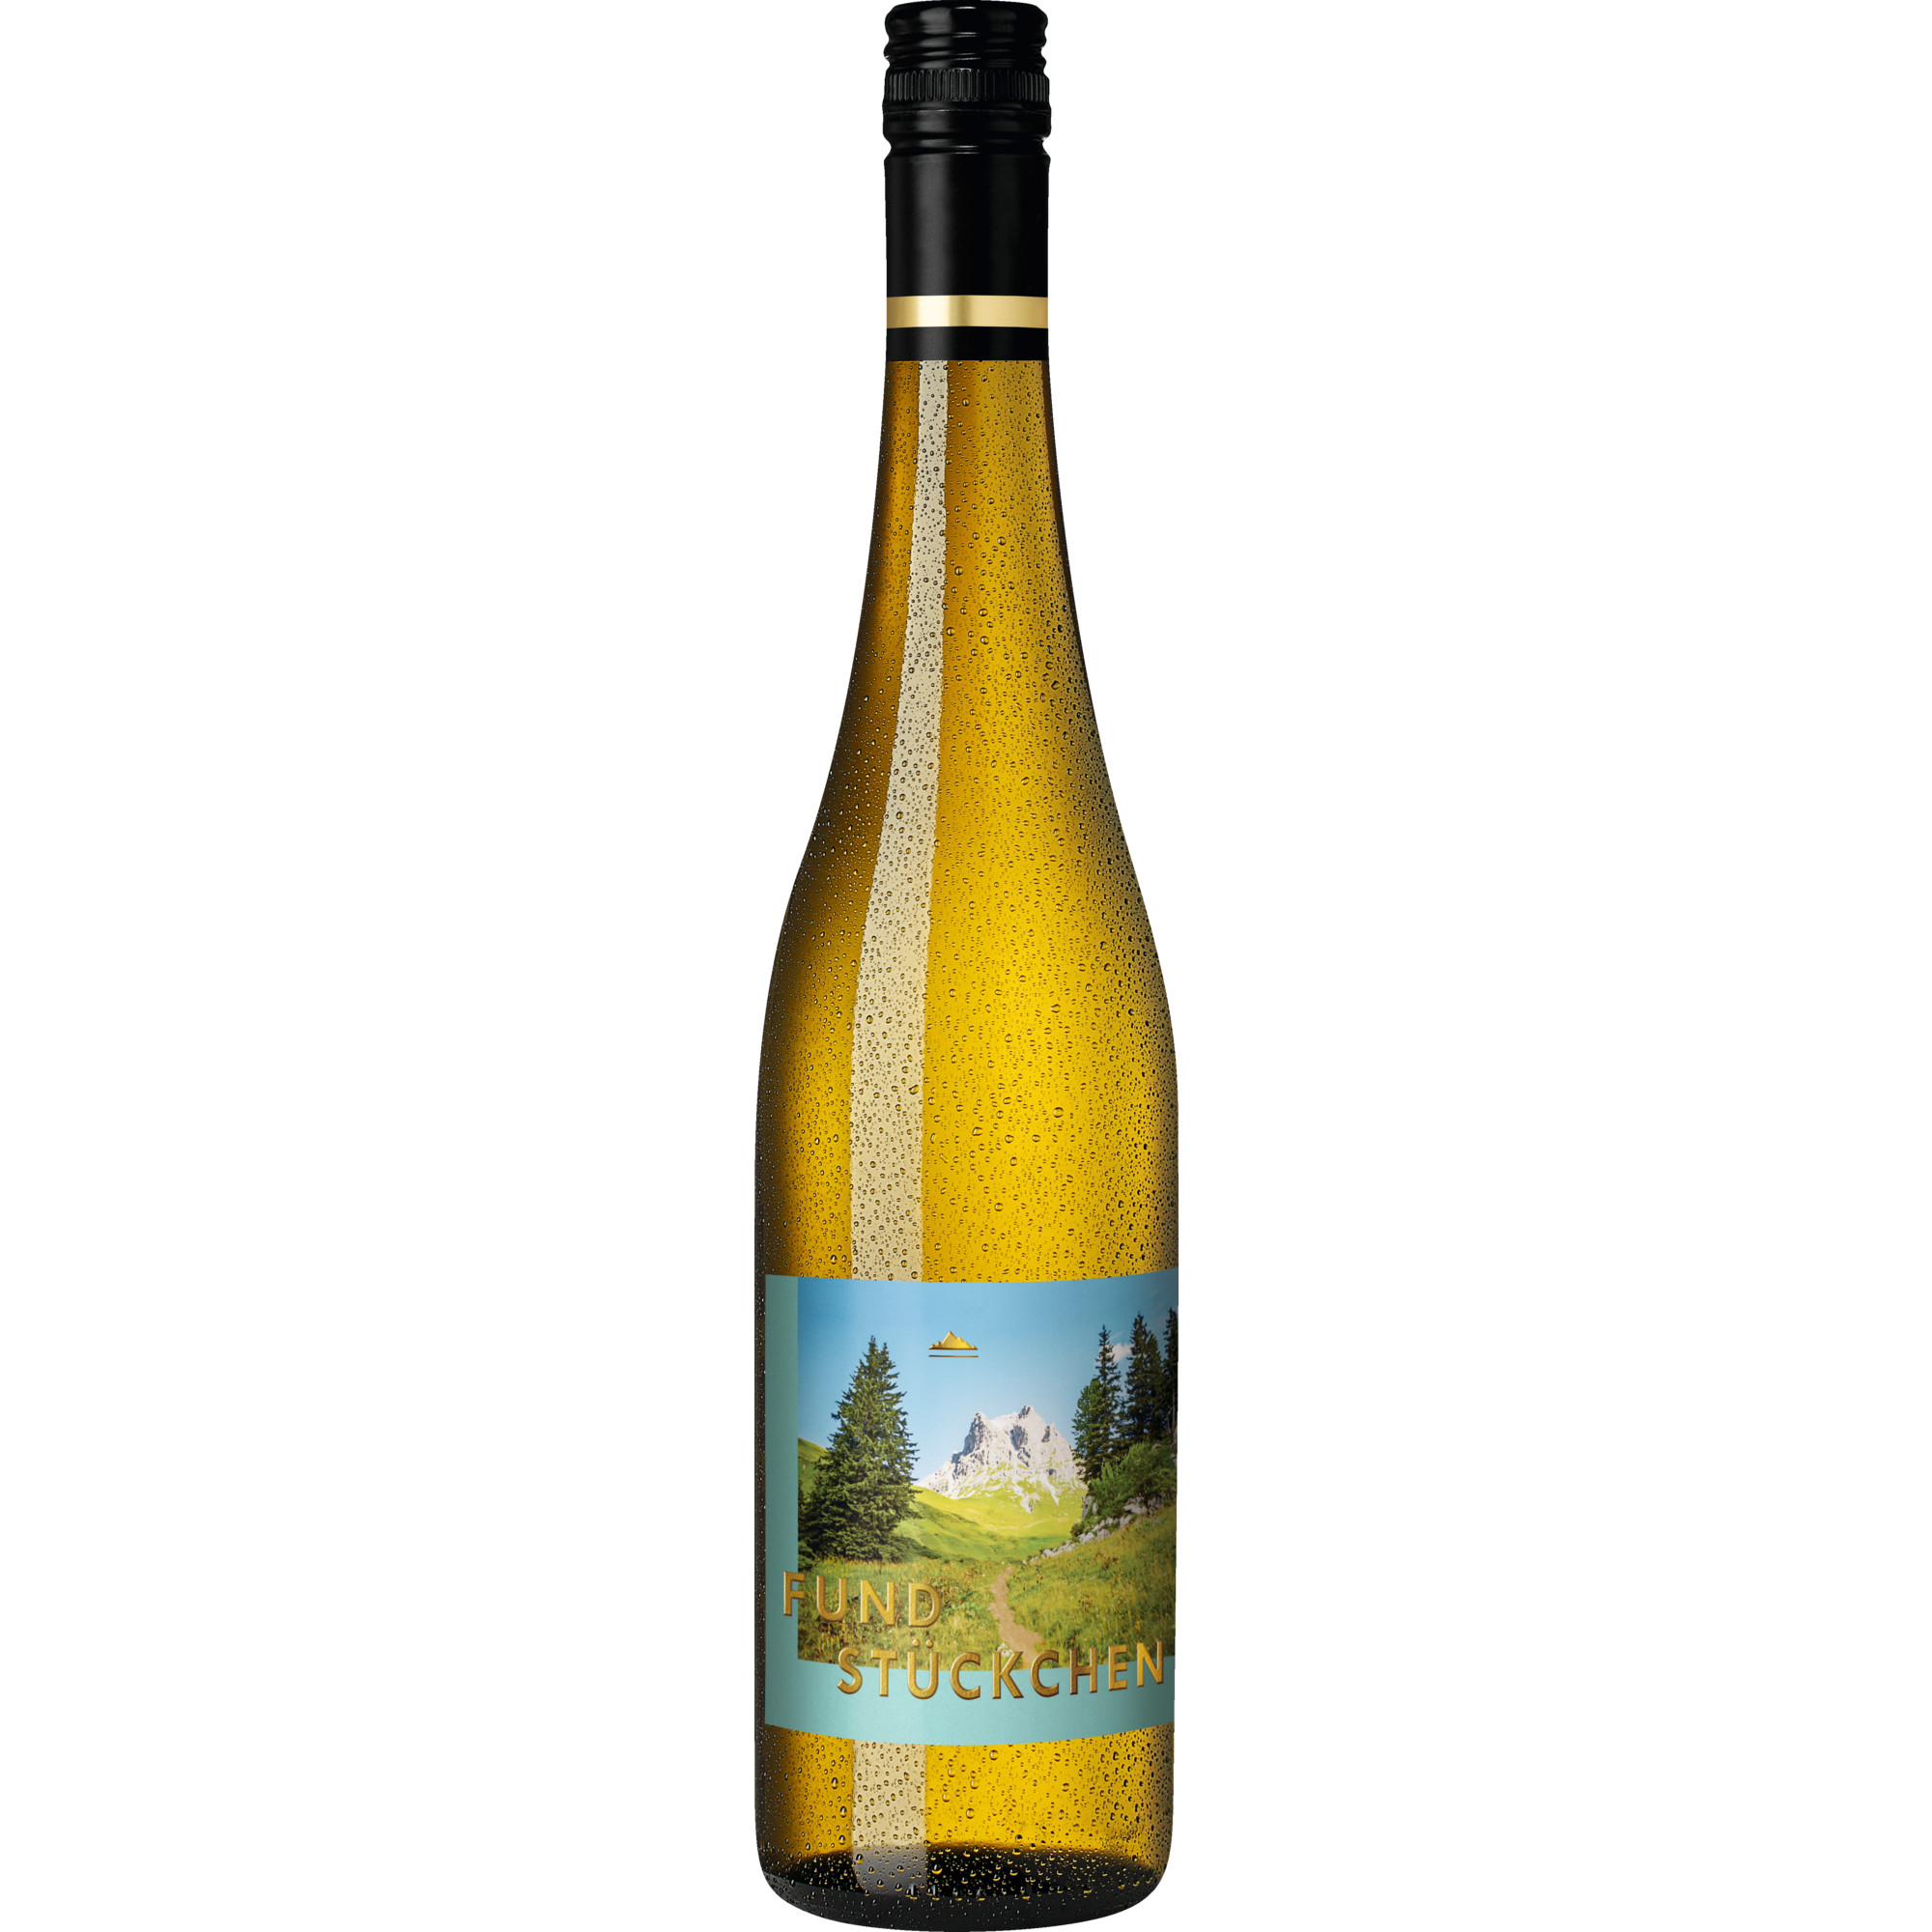 Fundstückchen Cuvée Weiß, Trocken, Niederösterreich, Niederösterreich, 2020, Weißwein  Weißwein Hawesko